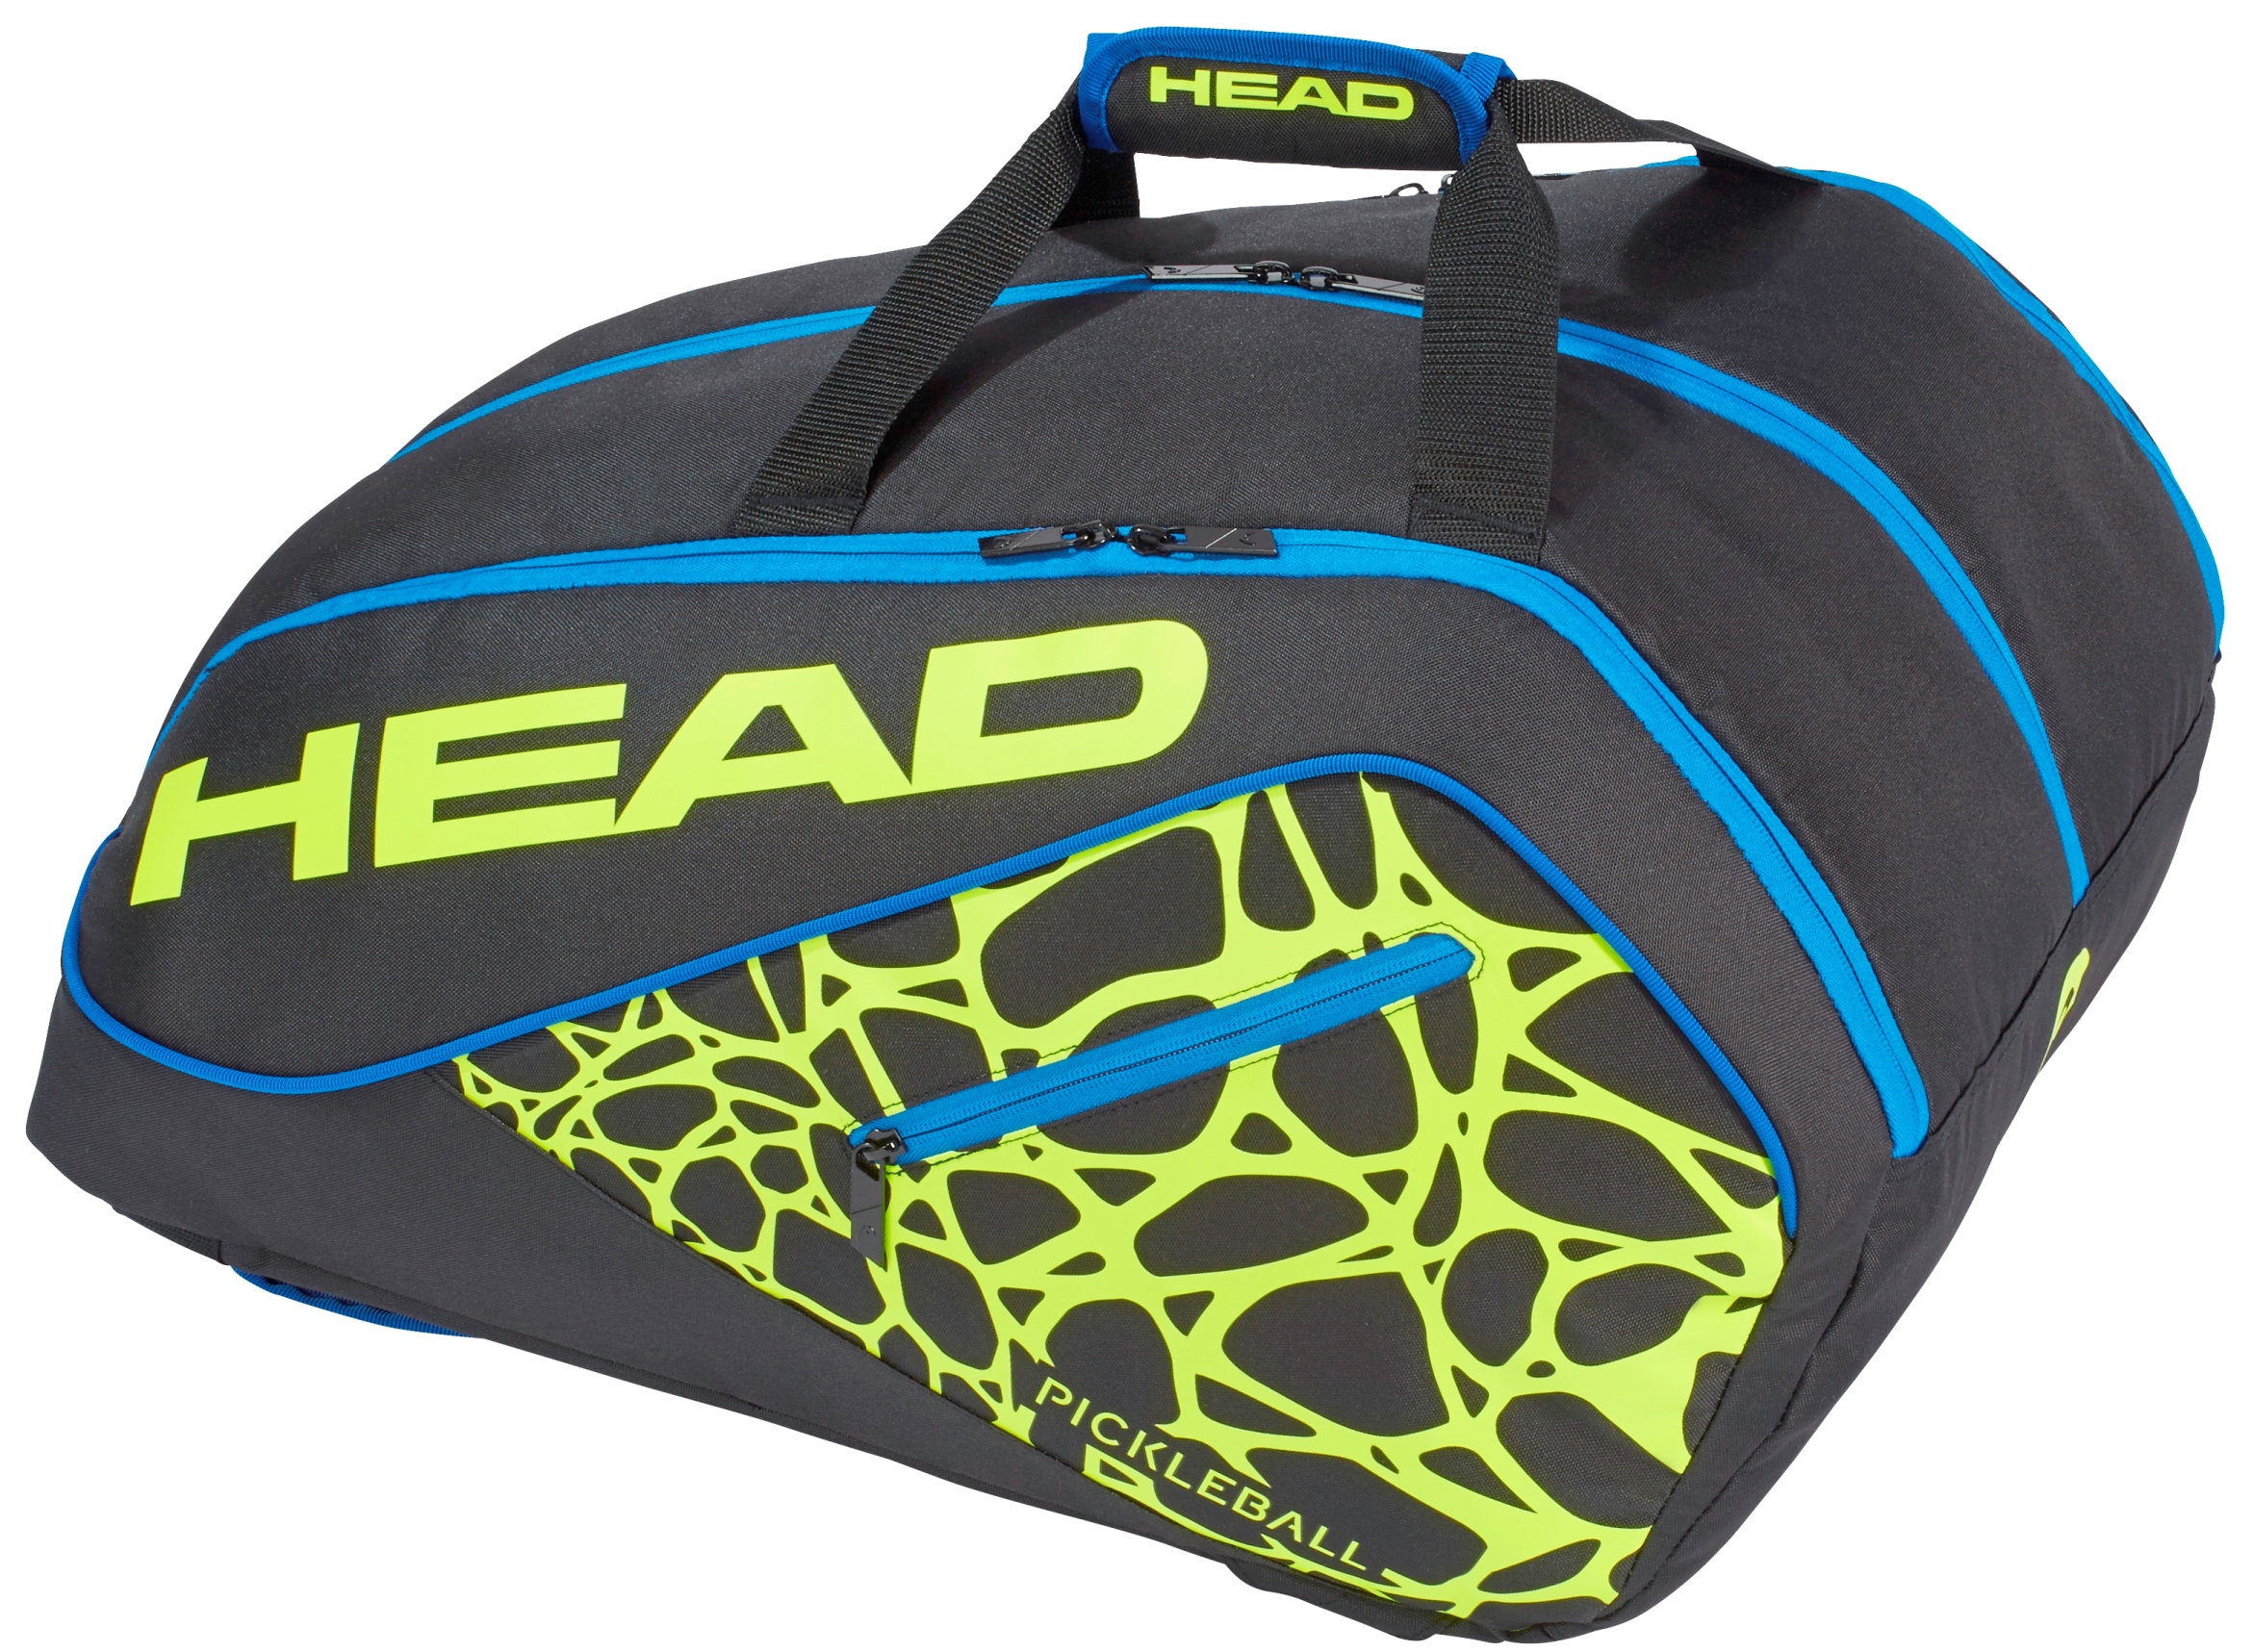 Head Tour Team Supercombi Pickleball Bag (Black/Neon Yellow/Blue)